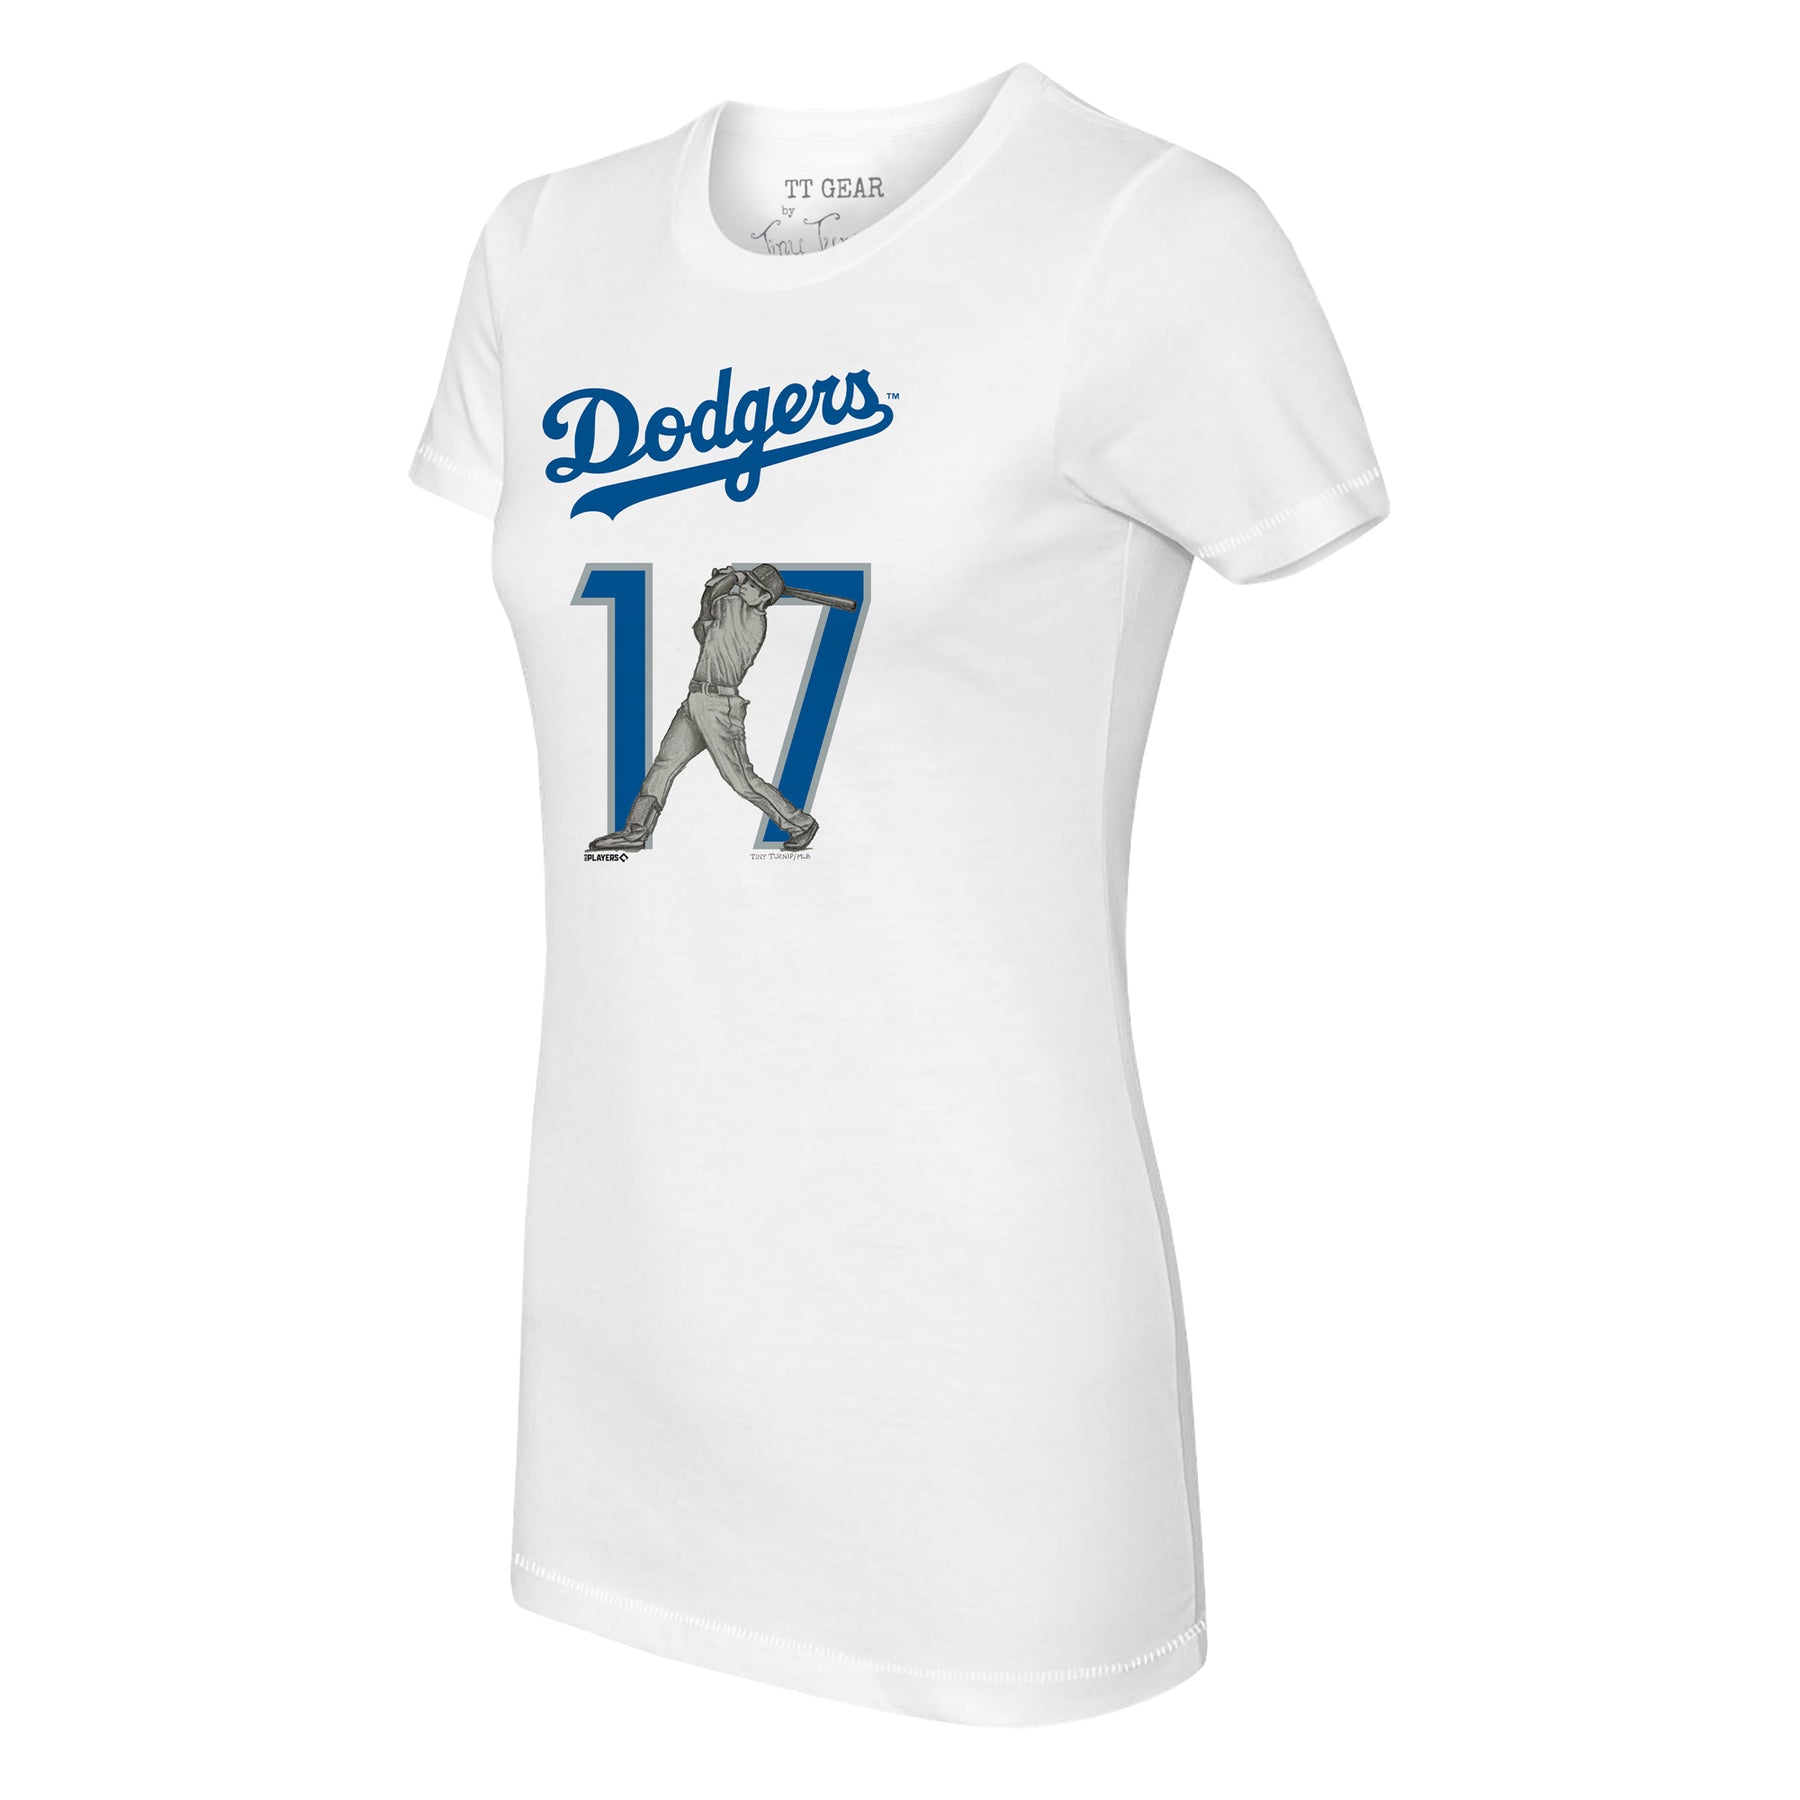 Los Angeles Dodgers Ohtani Batting Portrait Ohtani 17 Tee Shirt